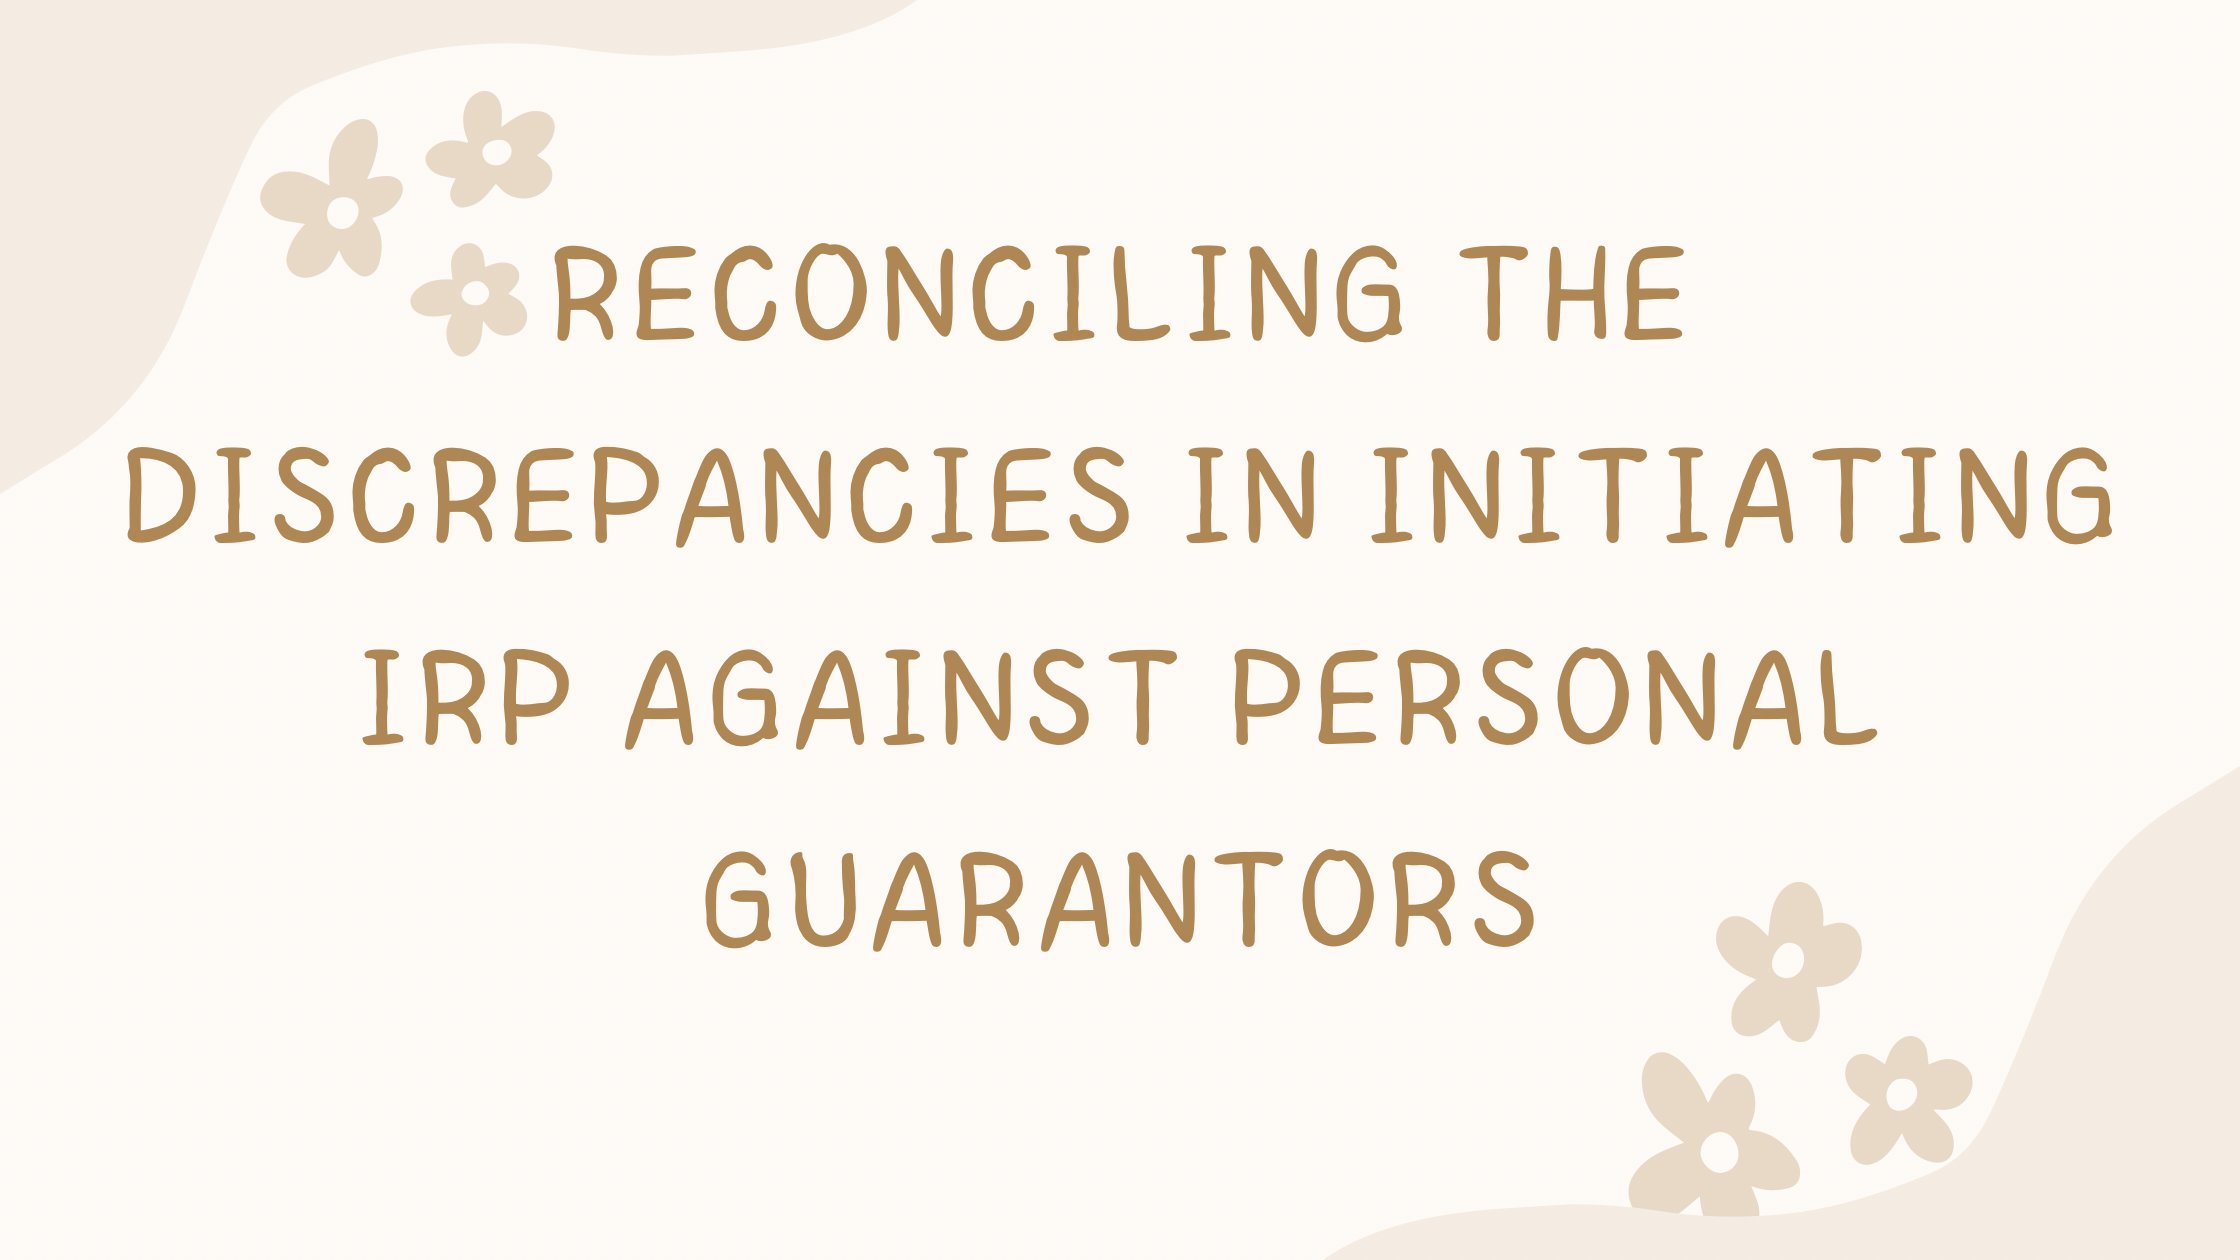 RECONCILING THE DISCREPANCIES IN INITIATING IRP AGAINST PERSONAL GUARANTORS.